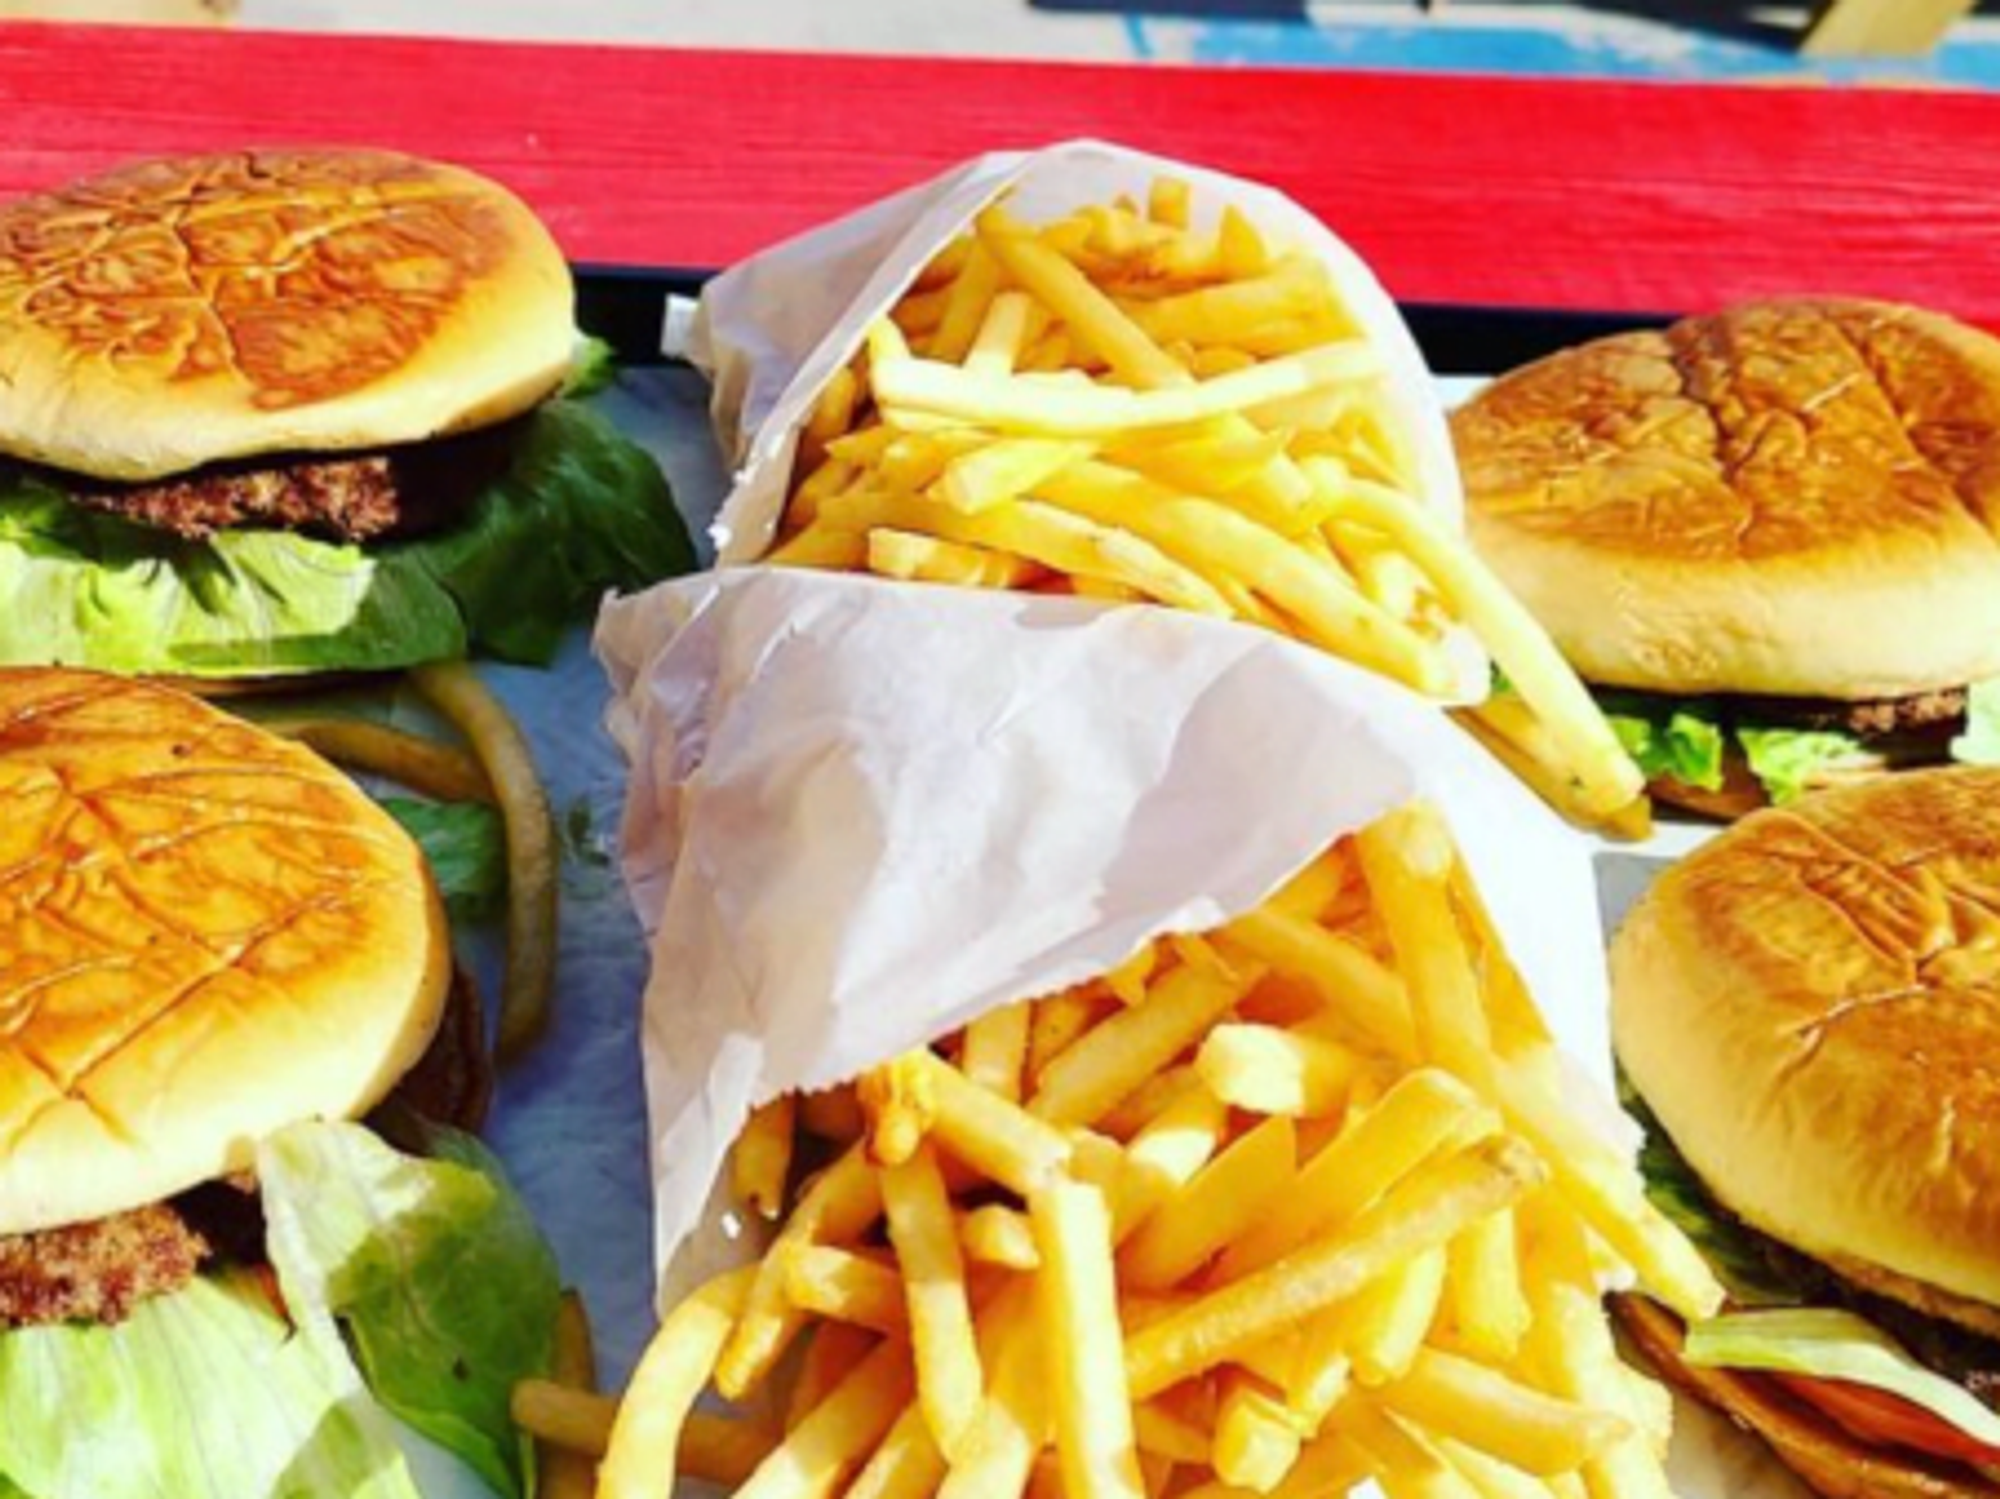 TJ's Hamburgers and fries